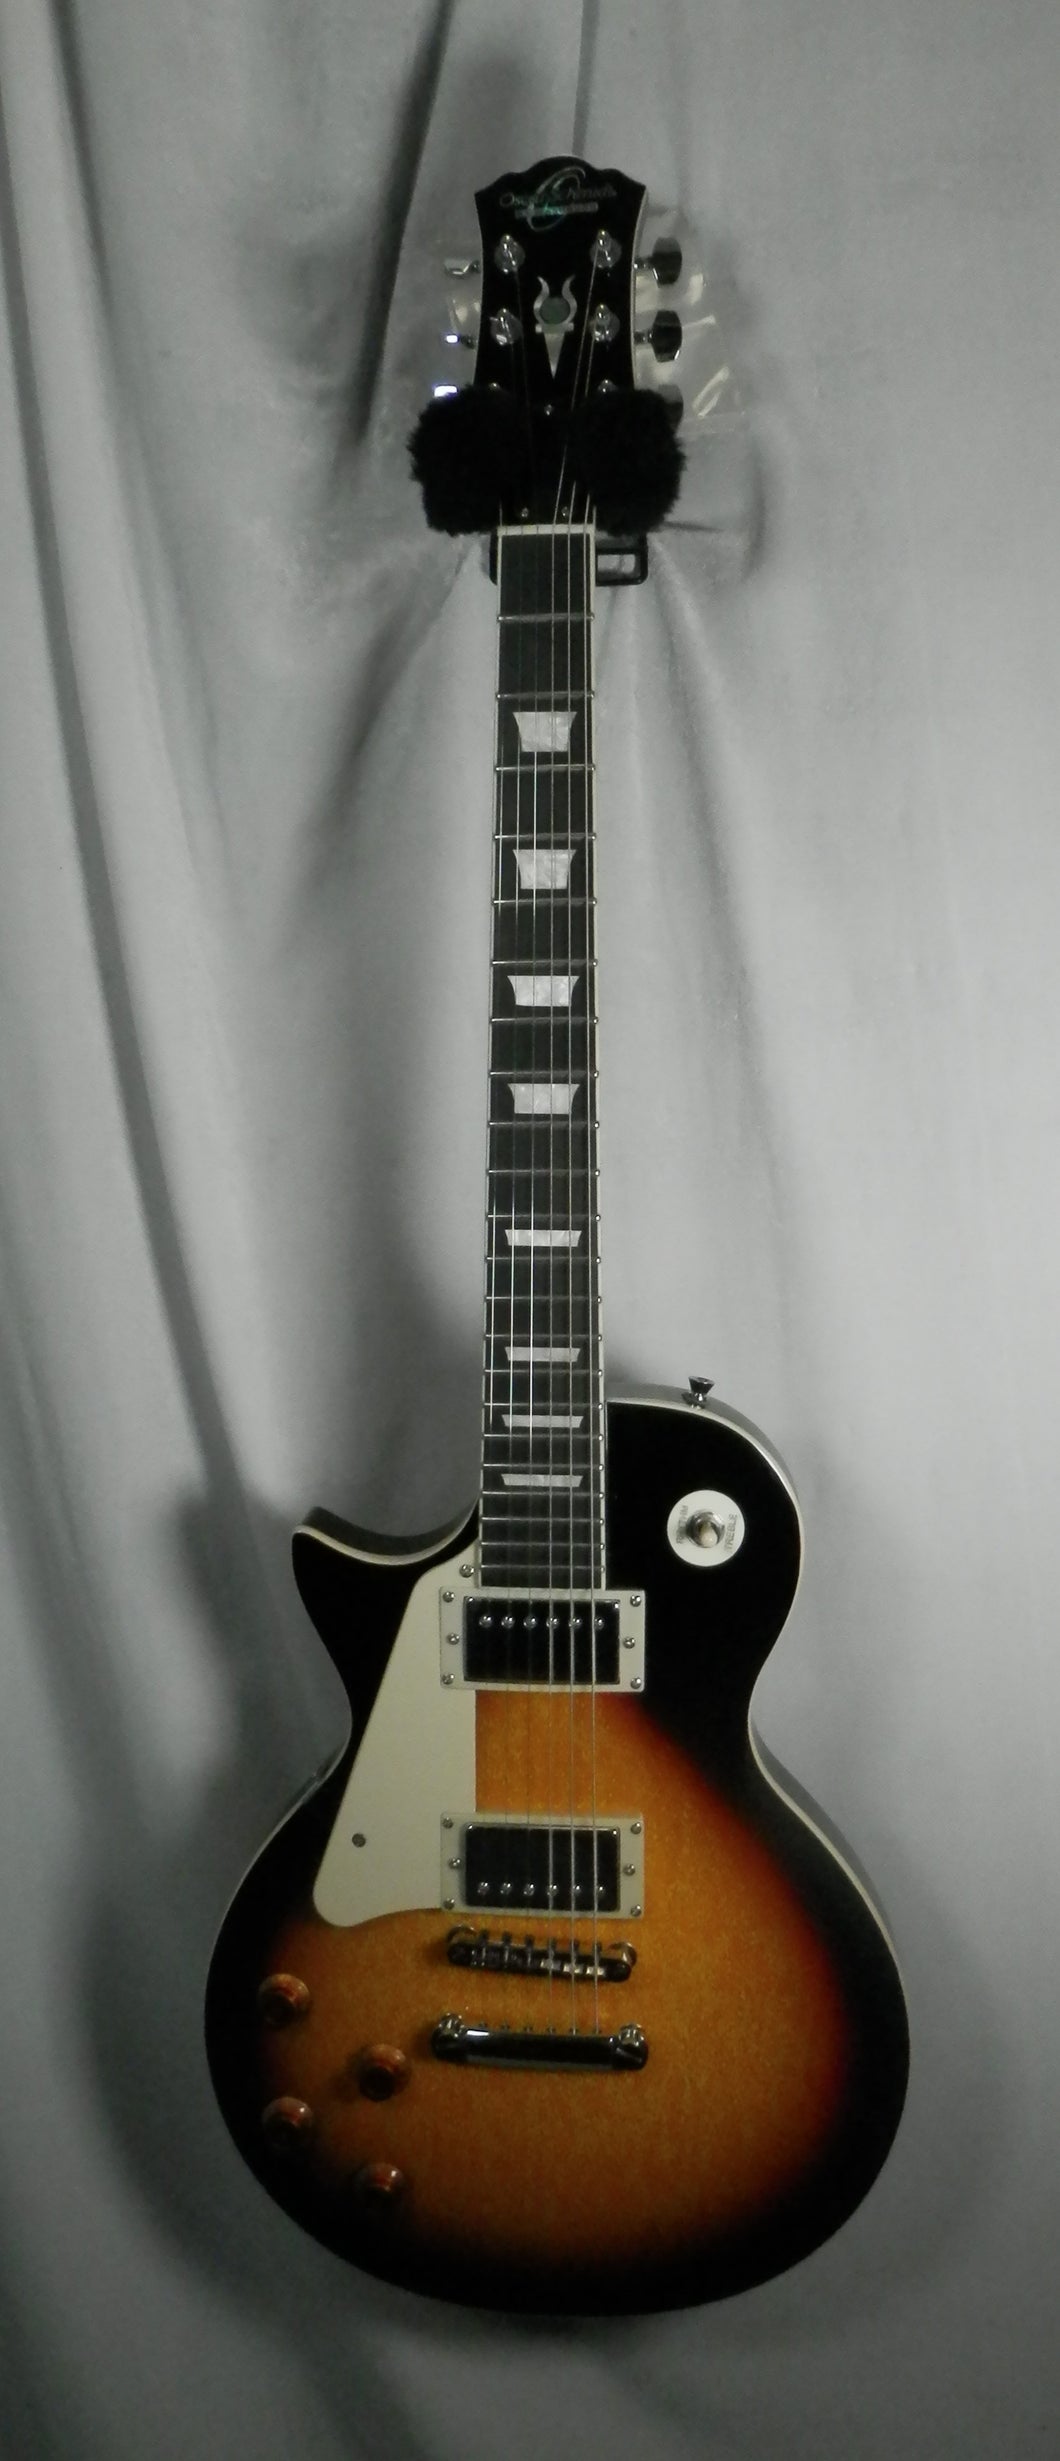 Oscar Schmidt OE20 Sunburst Left-Handed Electric Guitar used